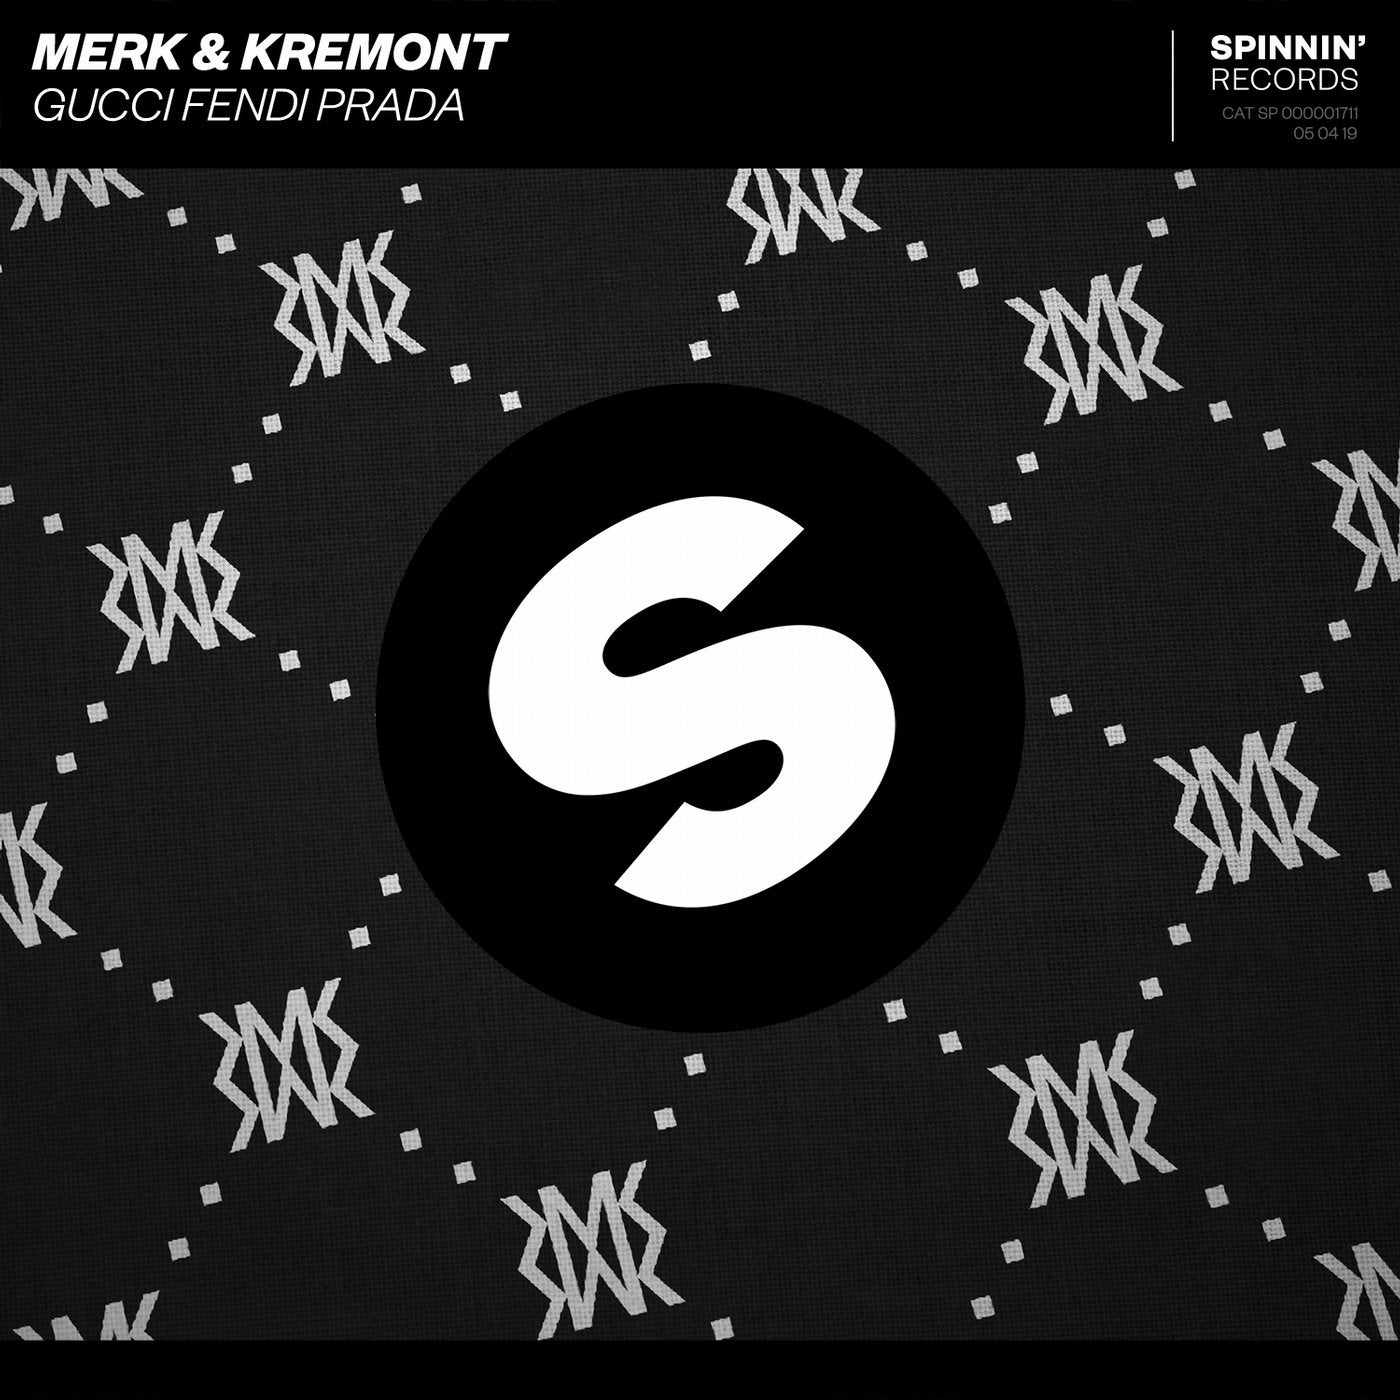 Gucci Fendi Prada (Extended Mix) by Merk & Kremont on Beatport